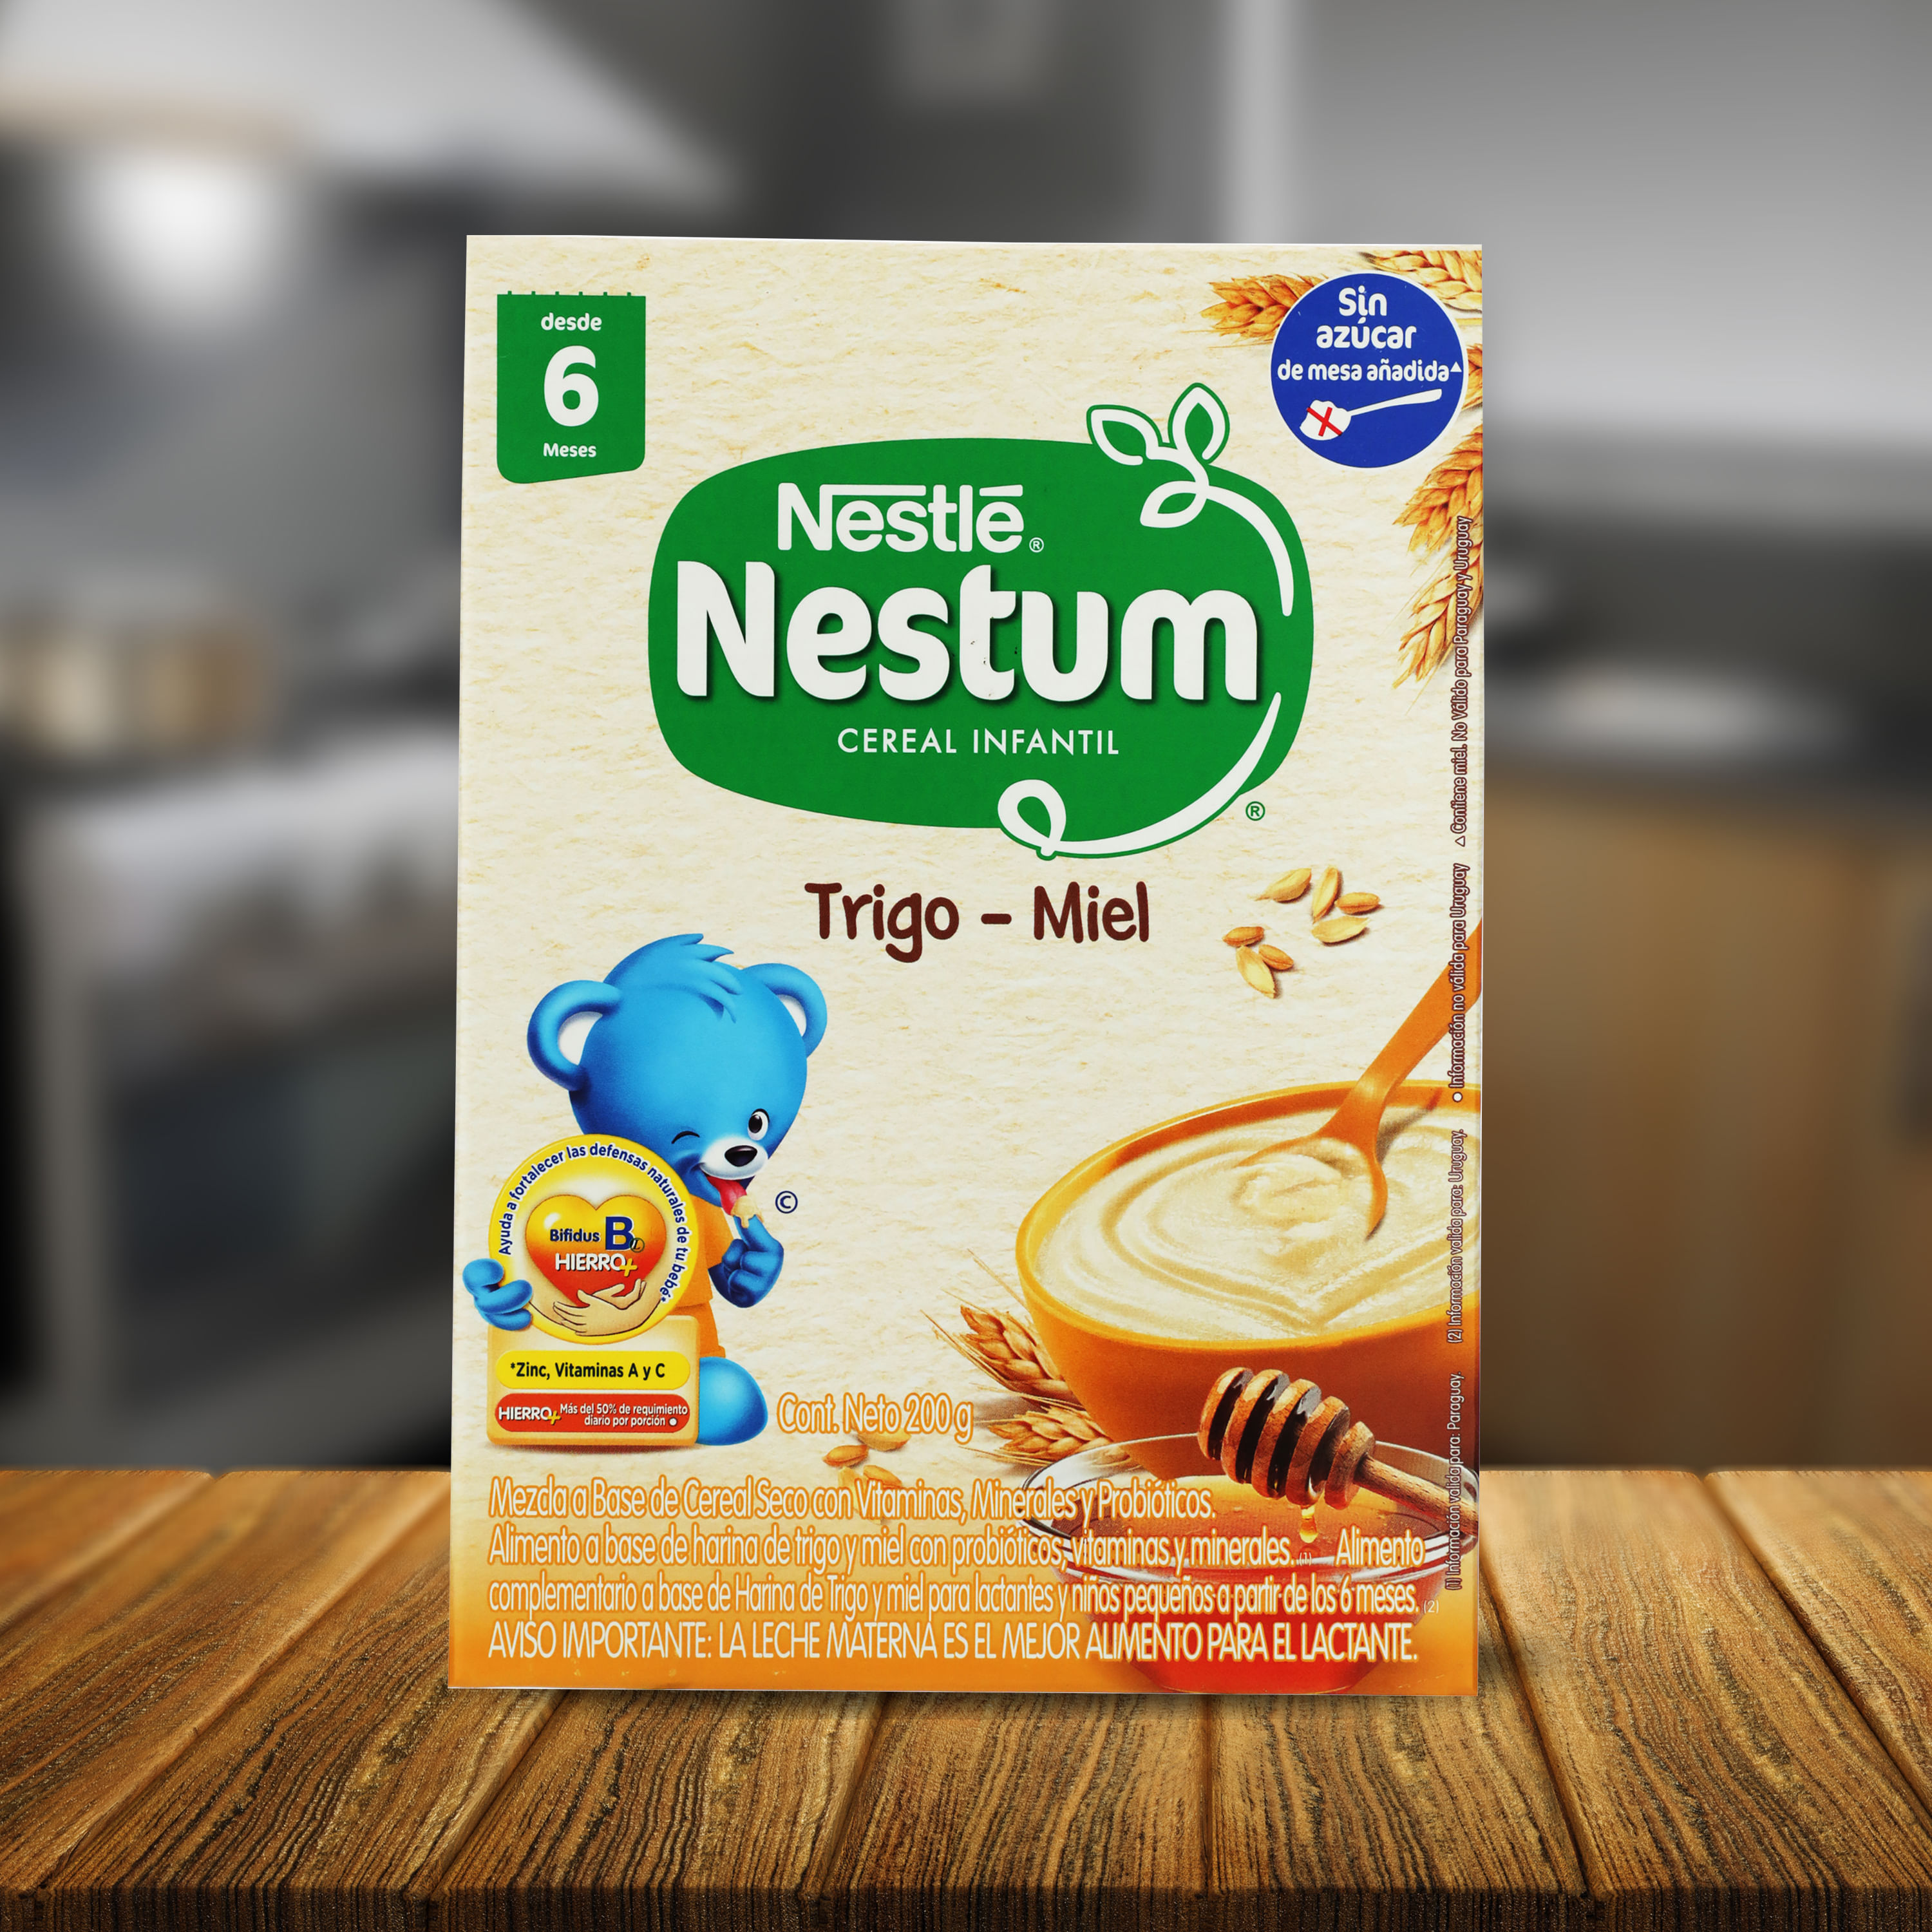 Nestle Nestum Trigo Miel Cereal Infantil Caja X 350 Gr NESTUM